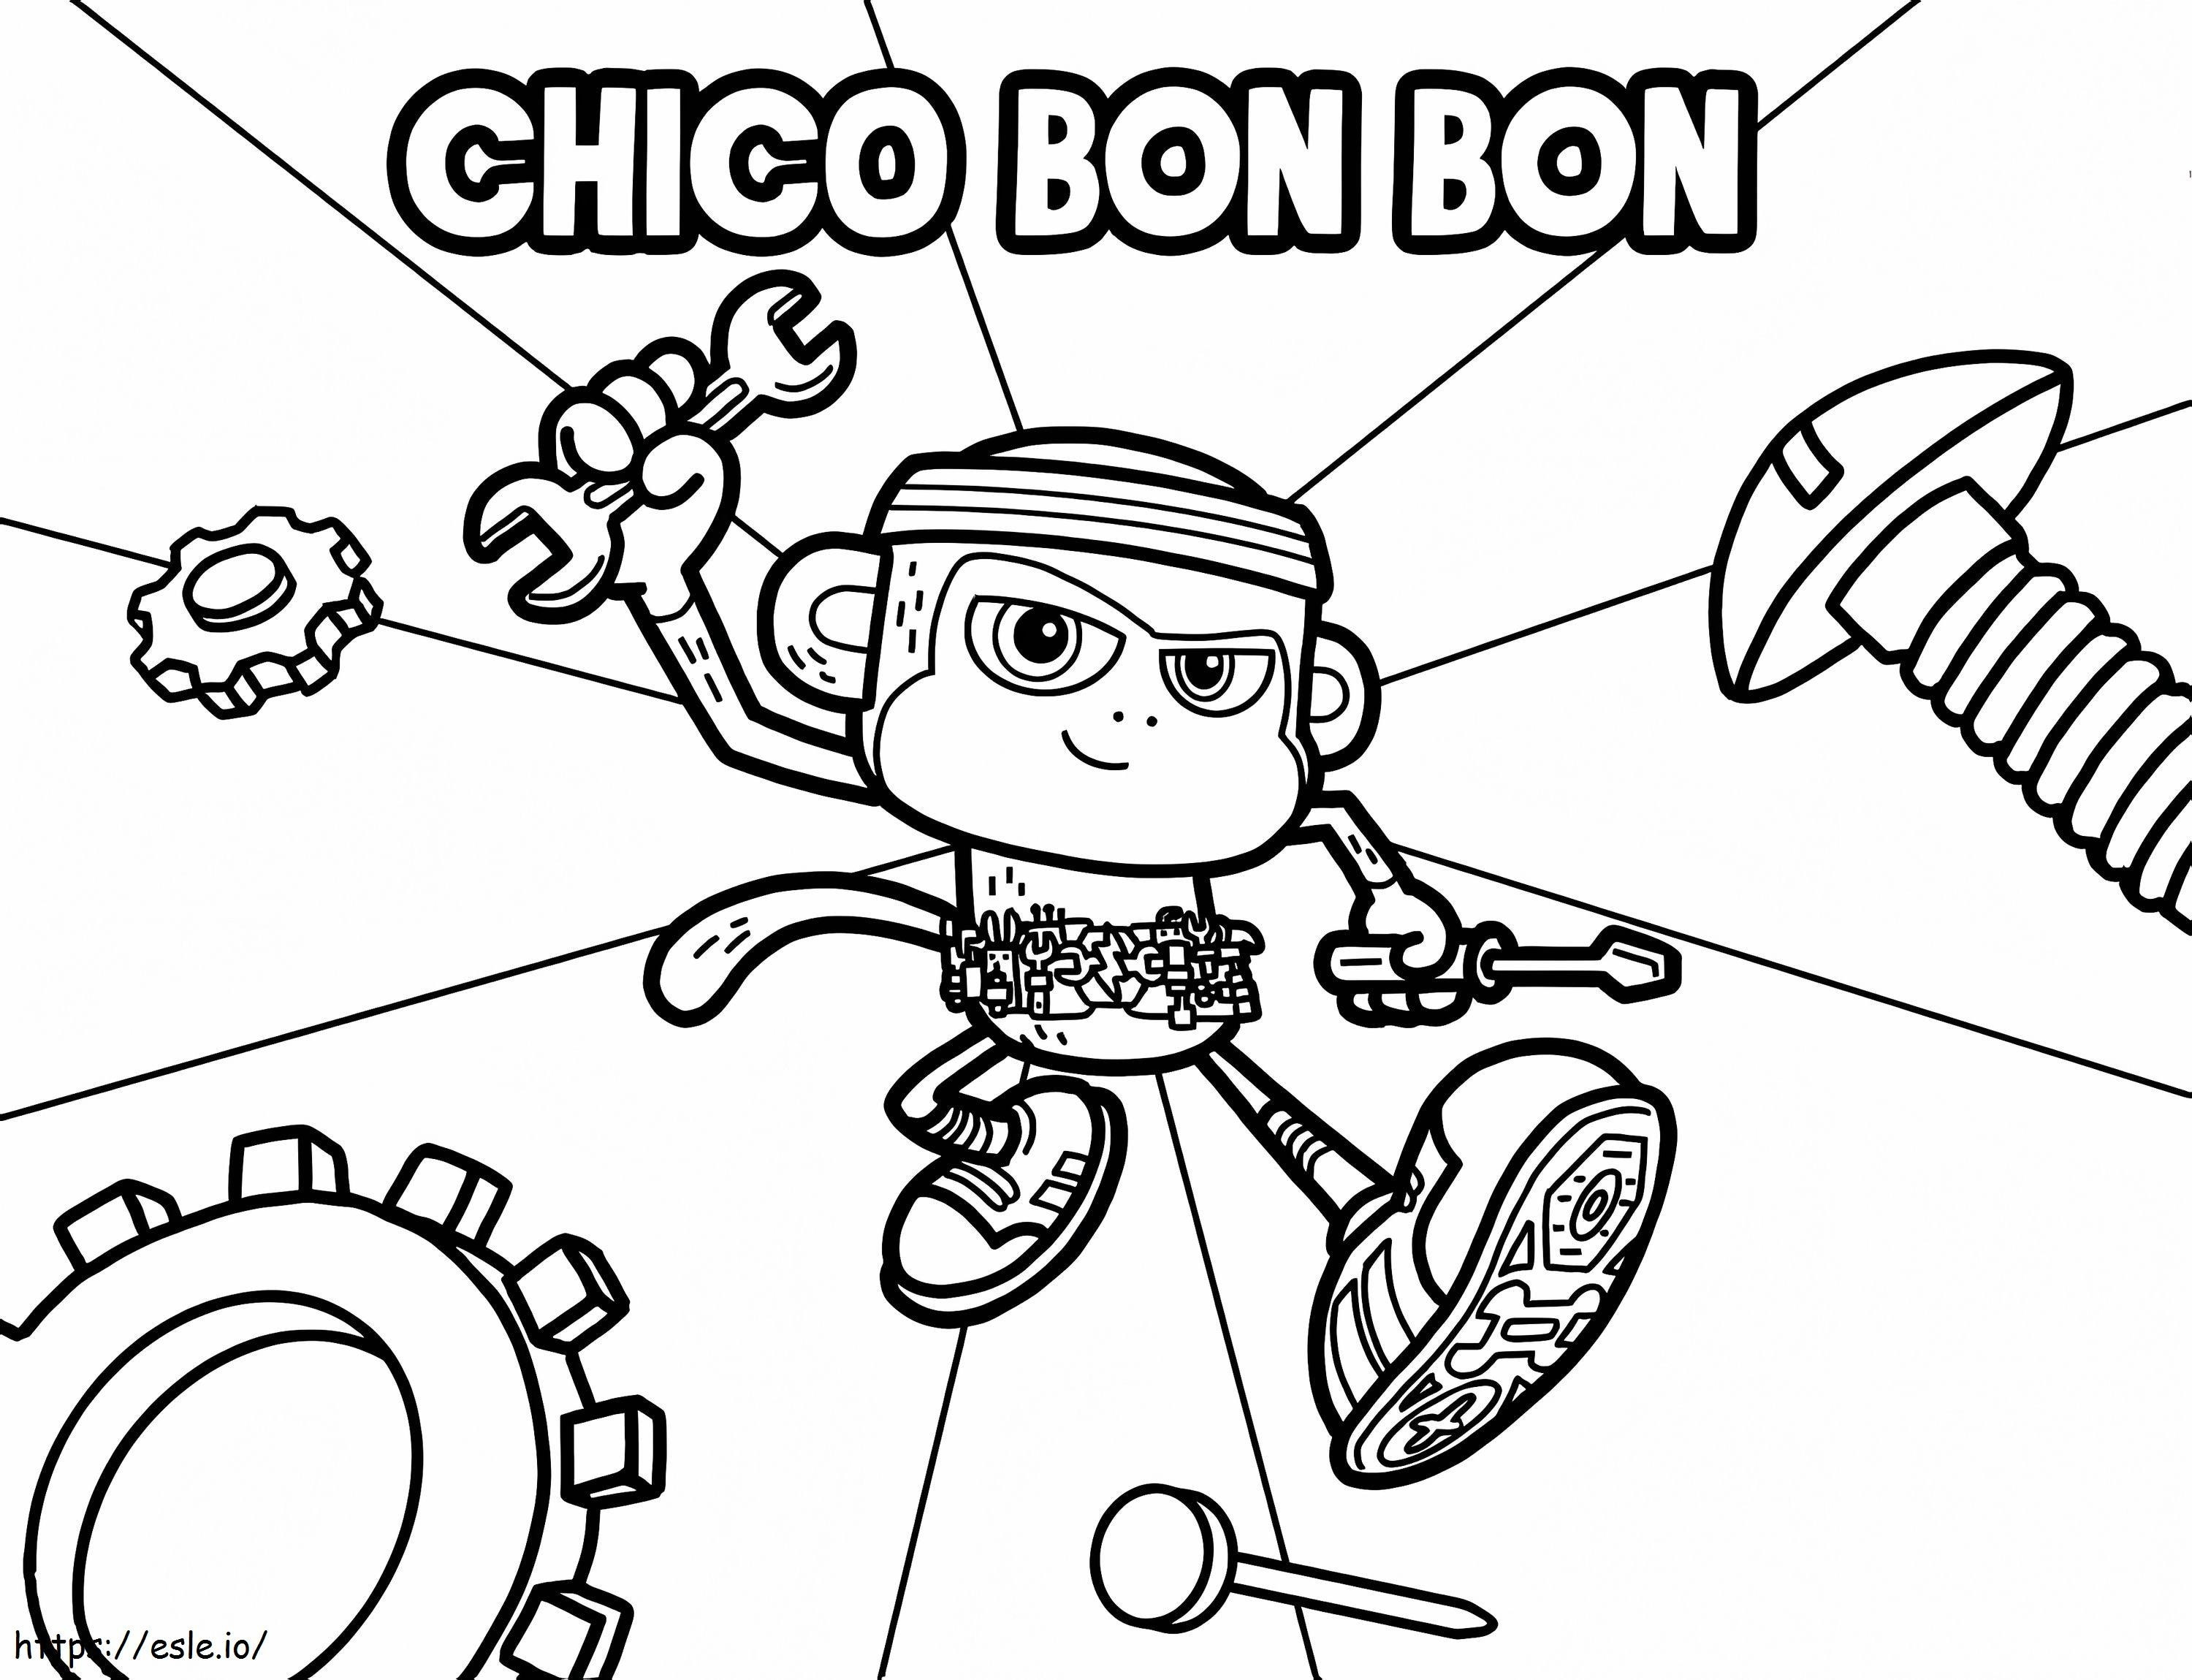 Havalı Chico Bon Bon boyama